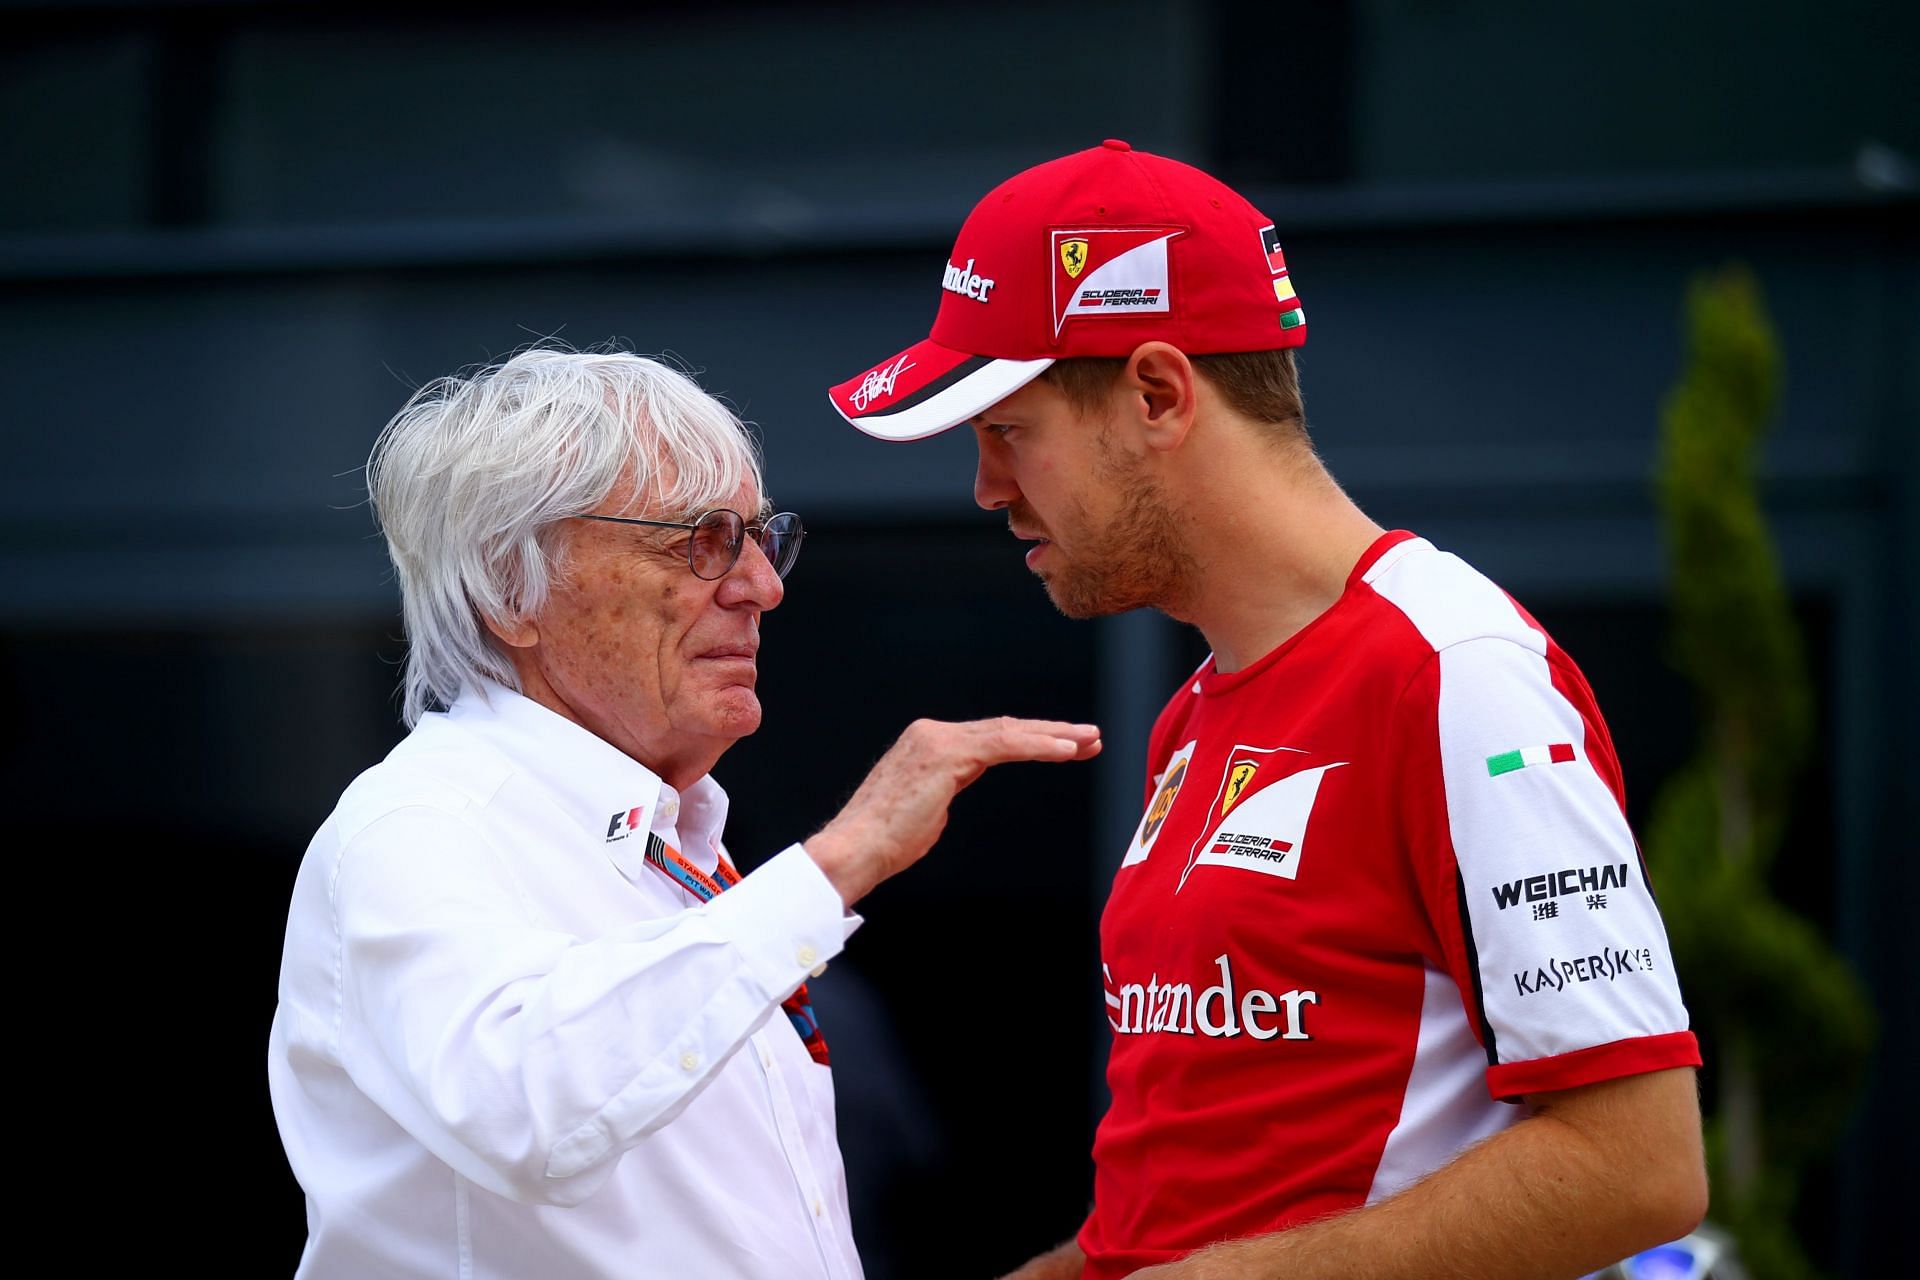 Bernie Ecclestone (left) and Sebastian Vettel (right) ahead of the 2017 British Grand Prix